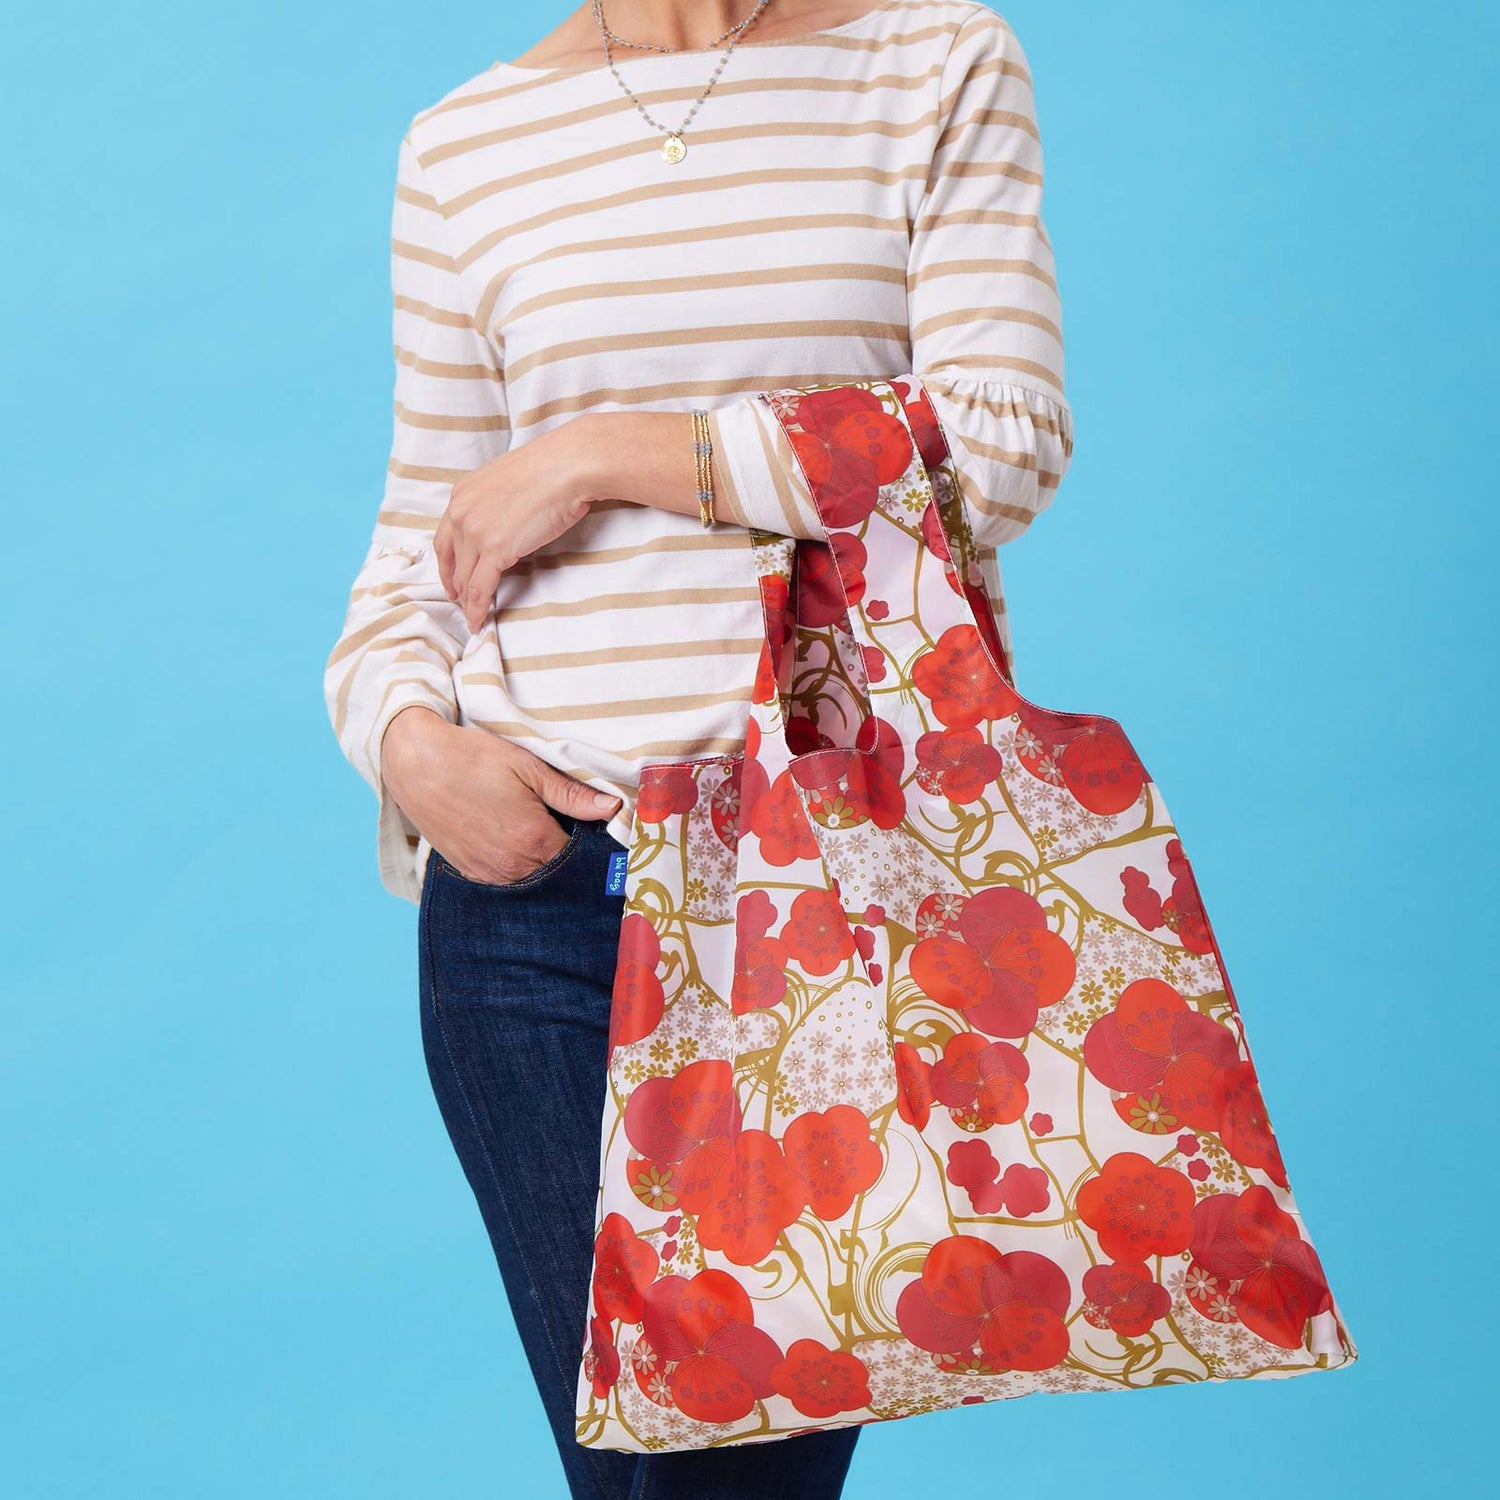 Kintsugi Blu Bag Reusable Shopping Bag - Machine Washable Reusable Shopping Bag - rockflowerpaper